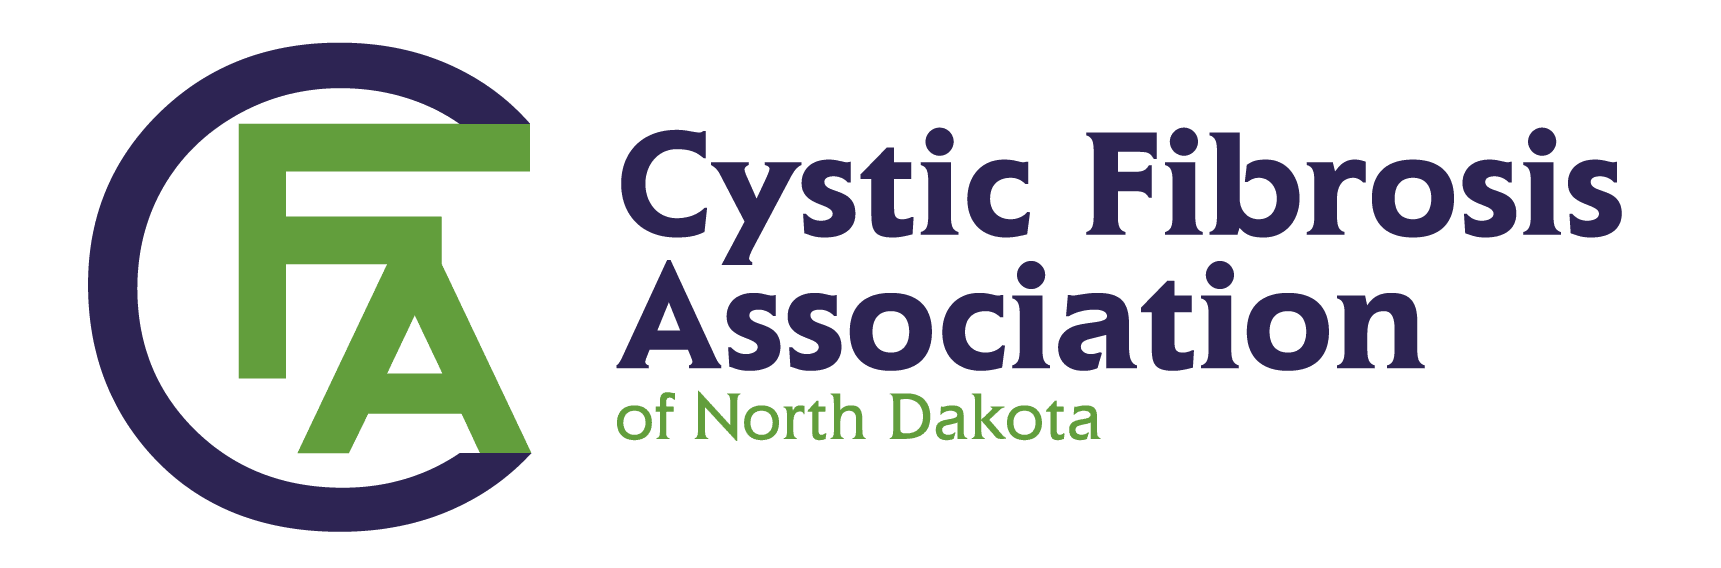 Cystic Fibrosis Association of North Dakota logo